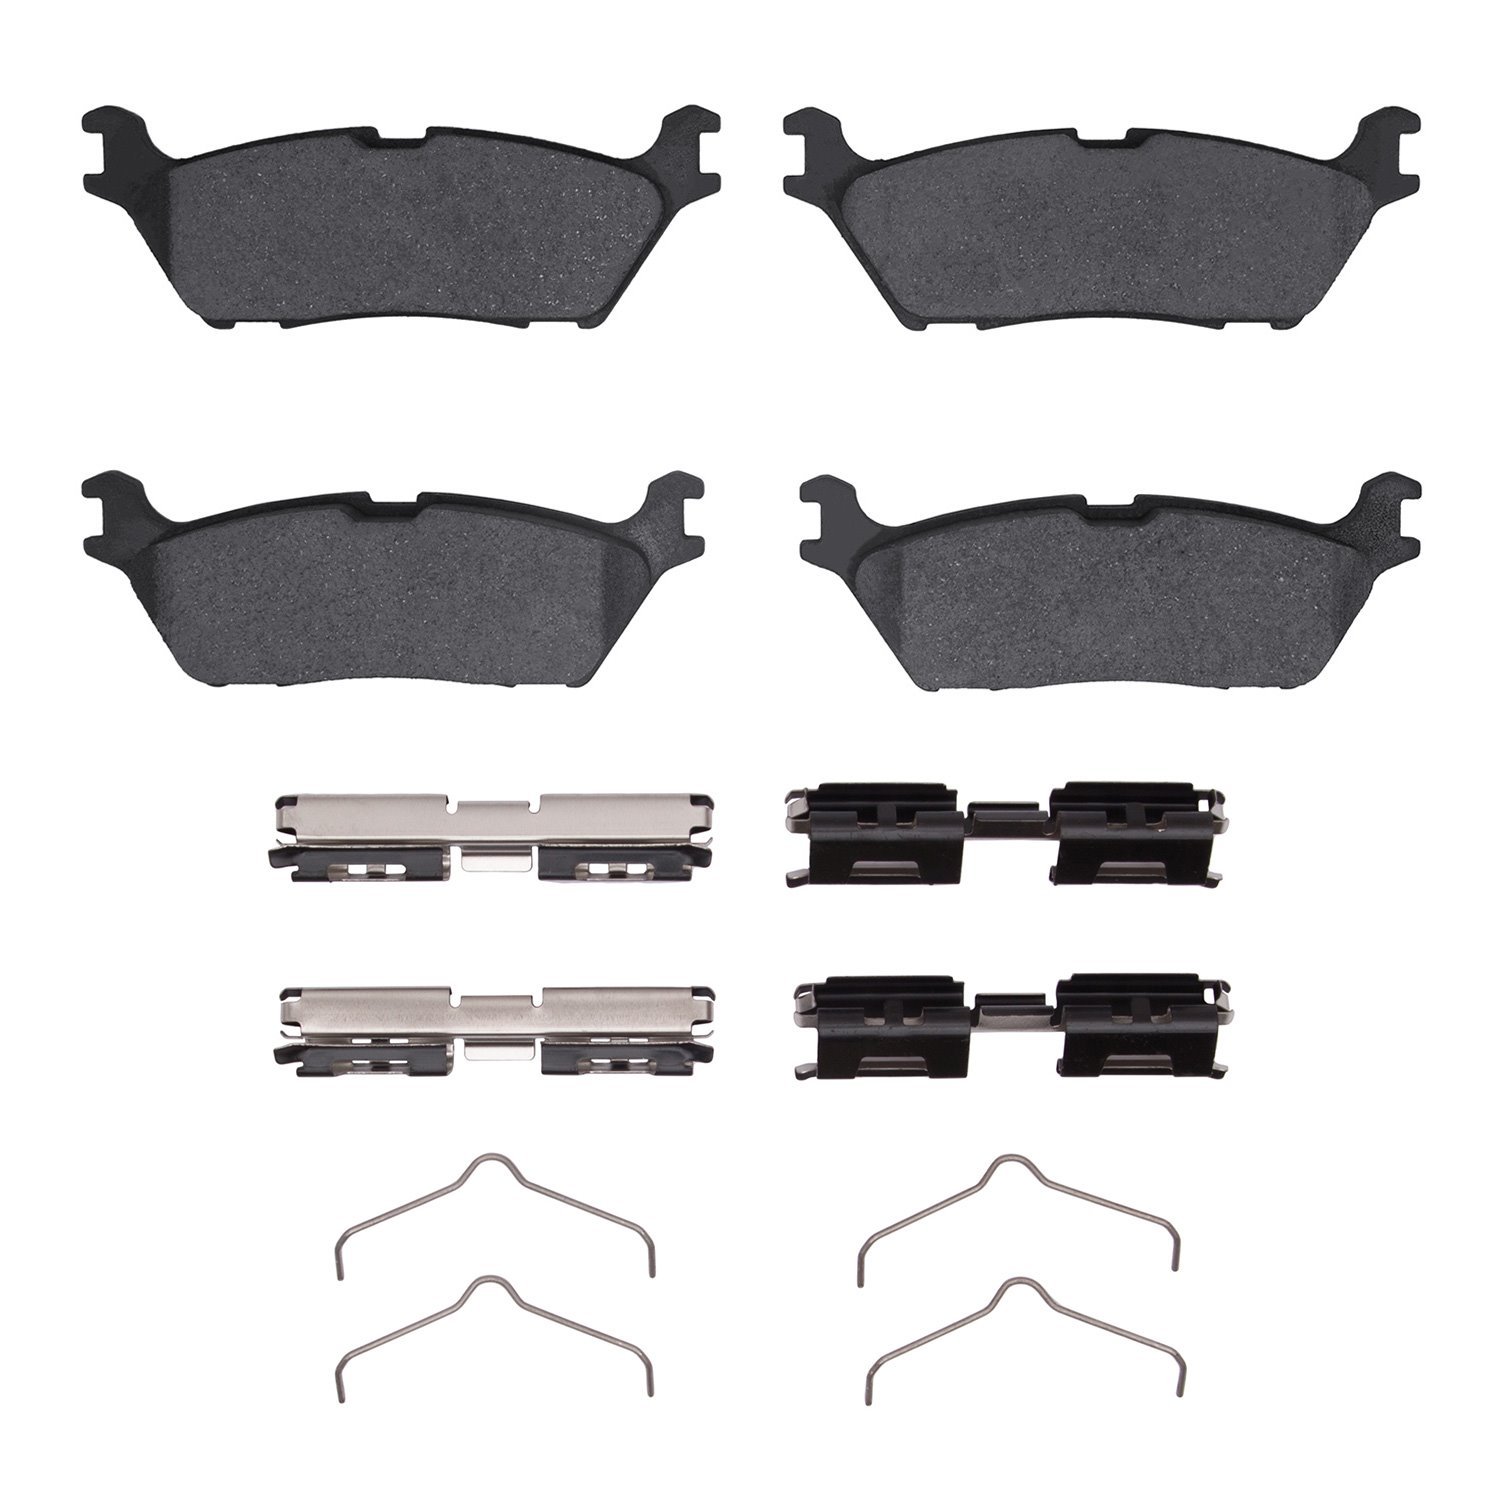 1551-2383-01 5000 Advanced Ceramic Brake Pads & Hardware Kit, Fits Select Ford/Lincoln/Mercury/Mazda, Position: Rear